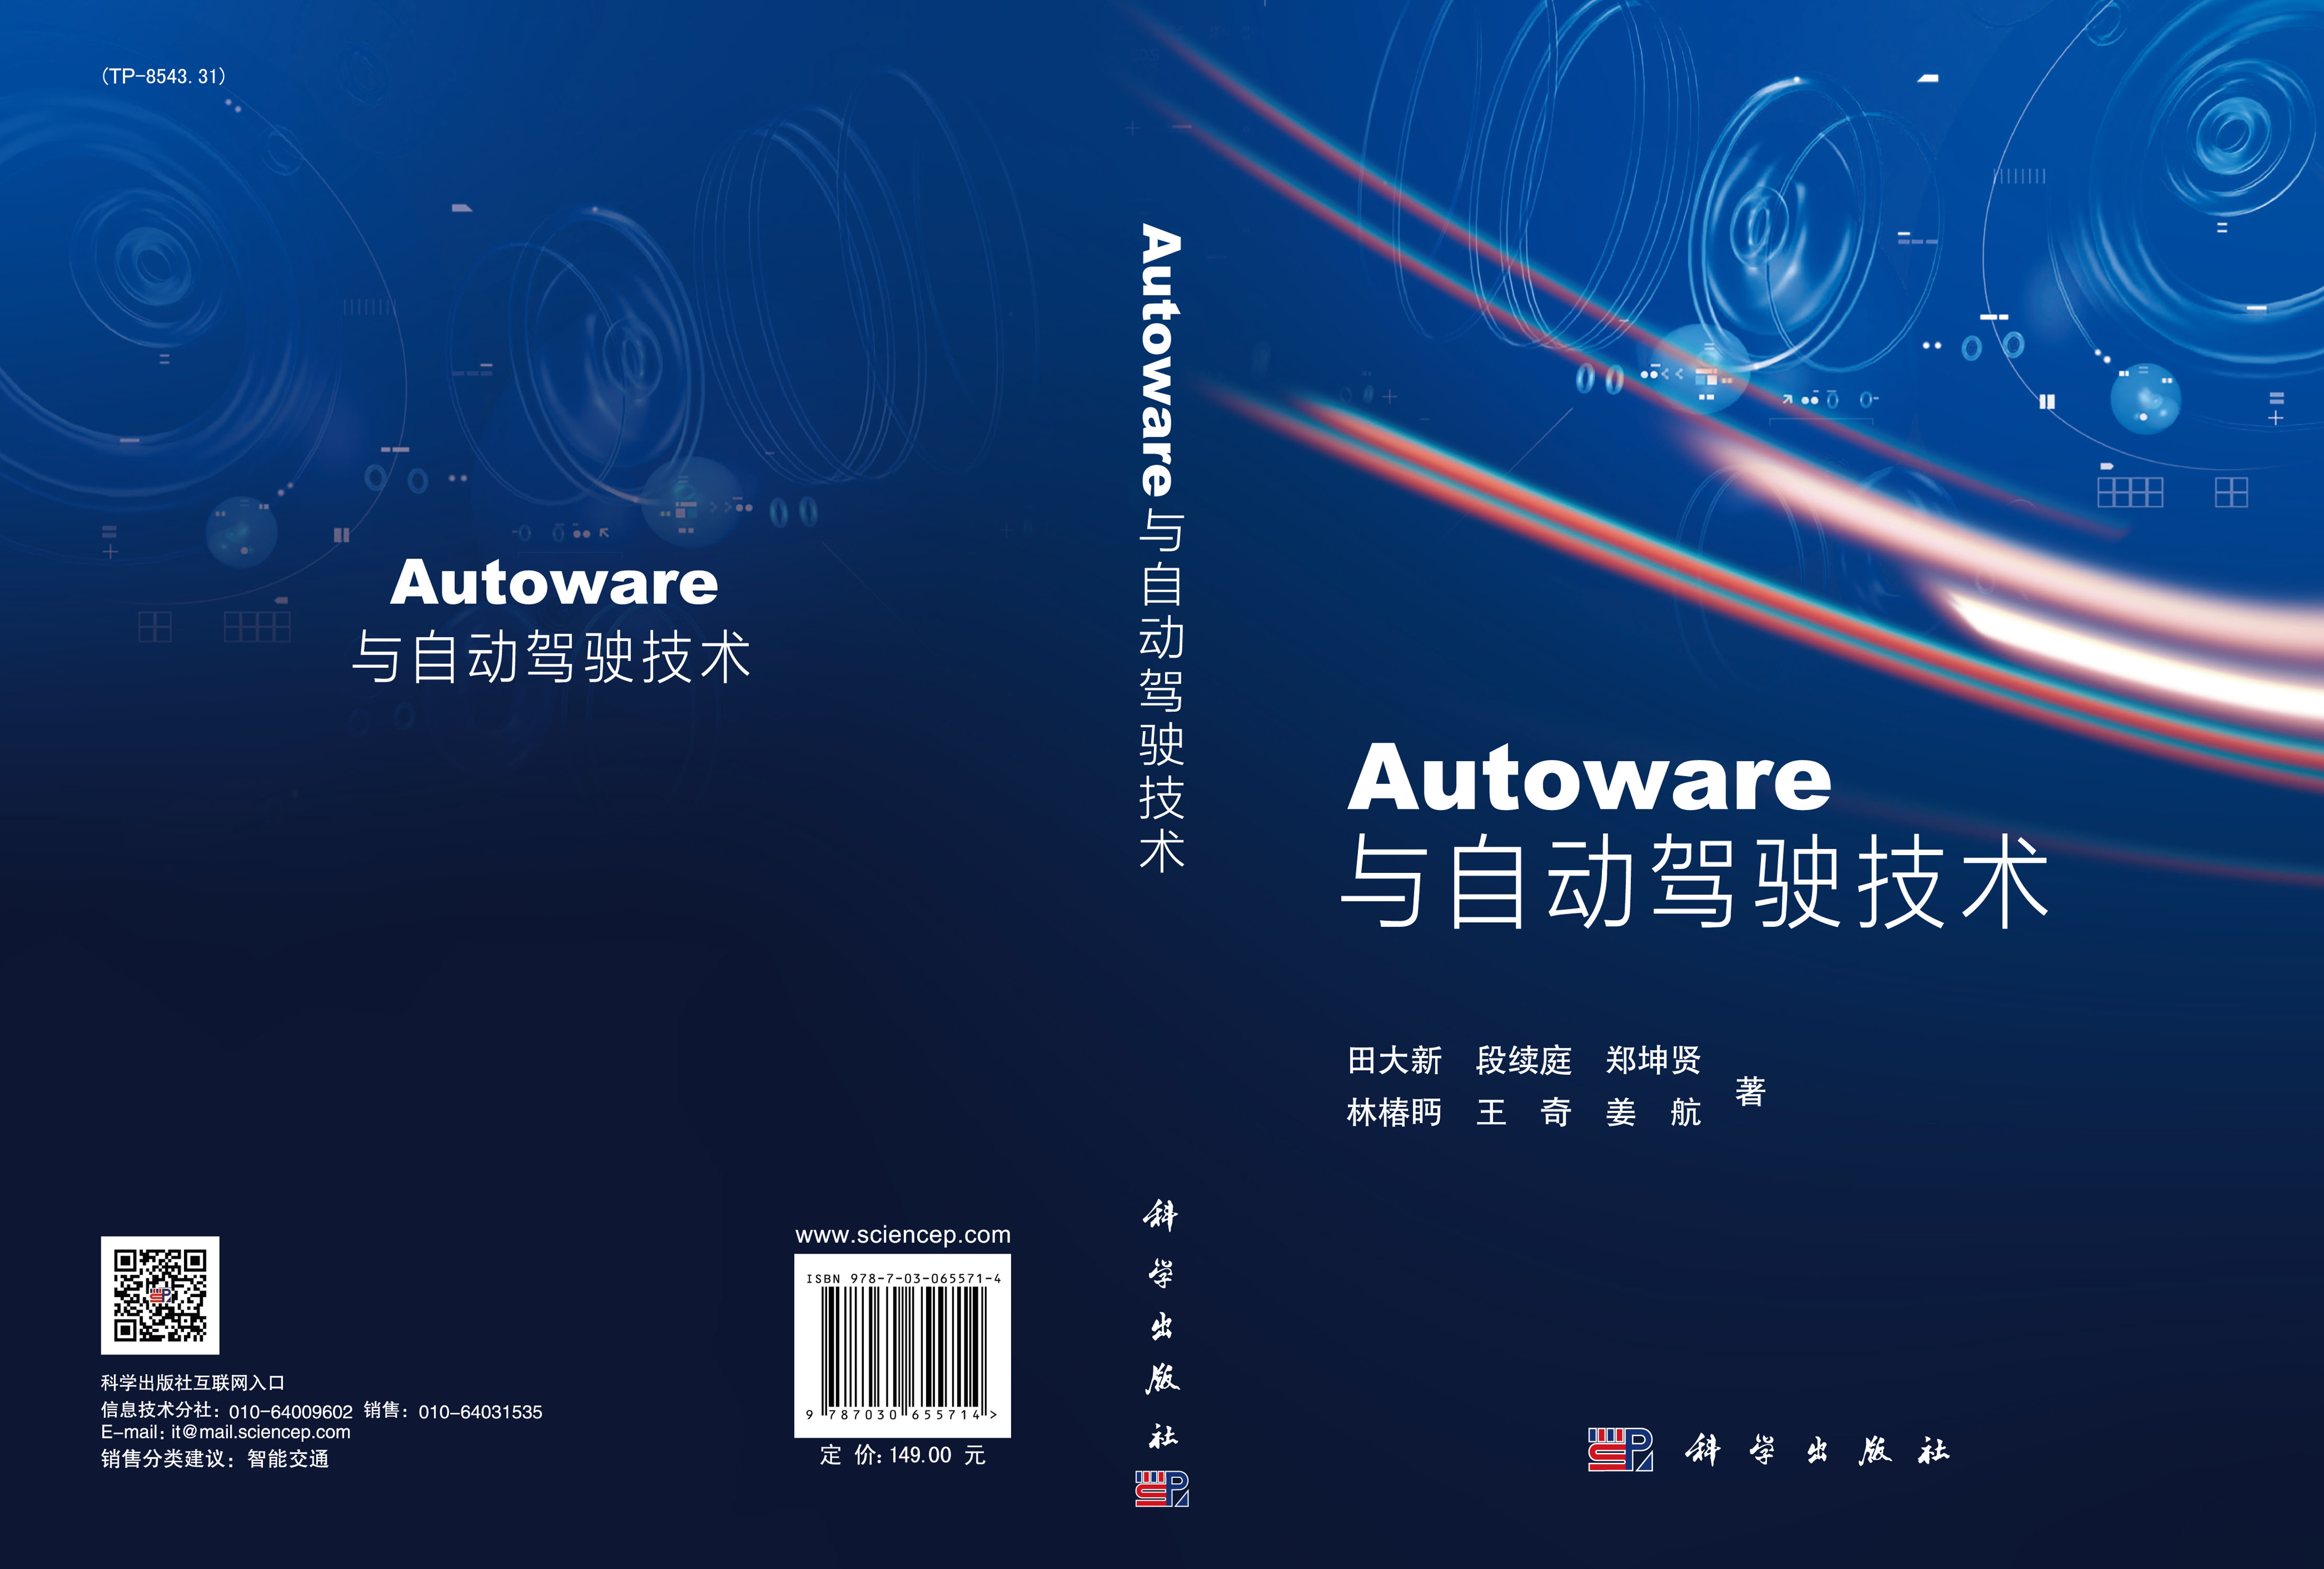 Autoware与自动驾驶技术